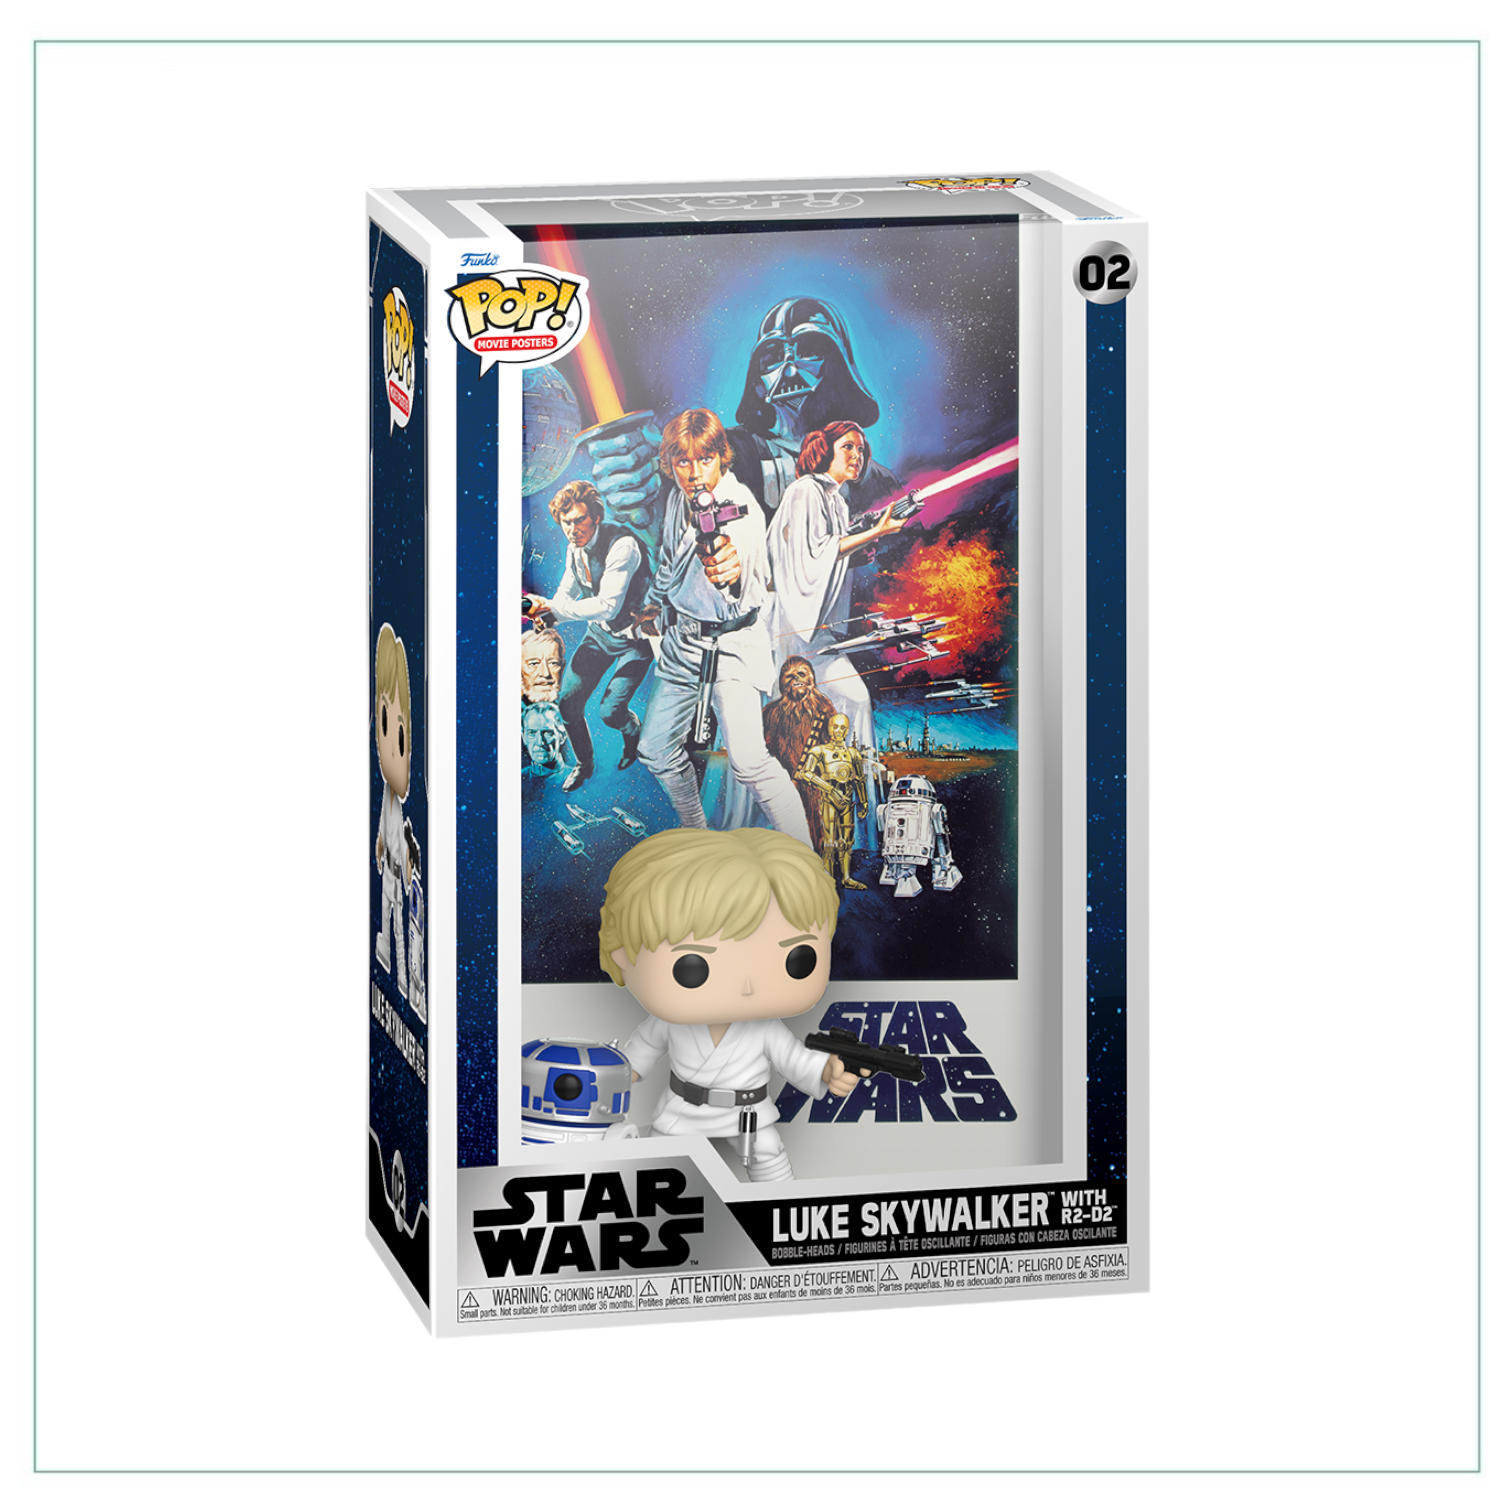 Luke Skywalker W/ R2-D2 #02 Funko Pop! Movie Poster Star Wars - PREORDER